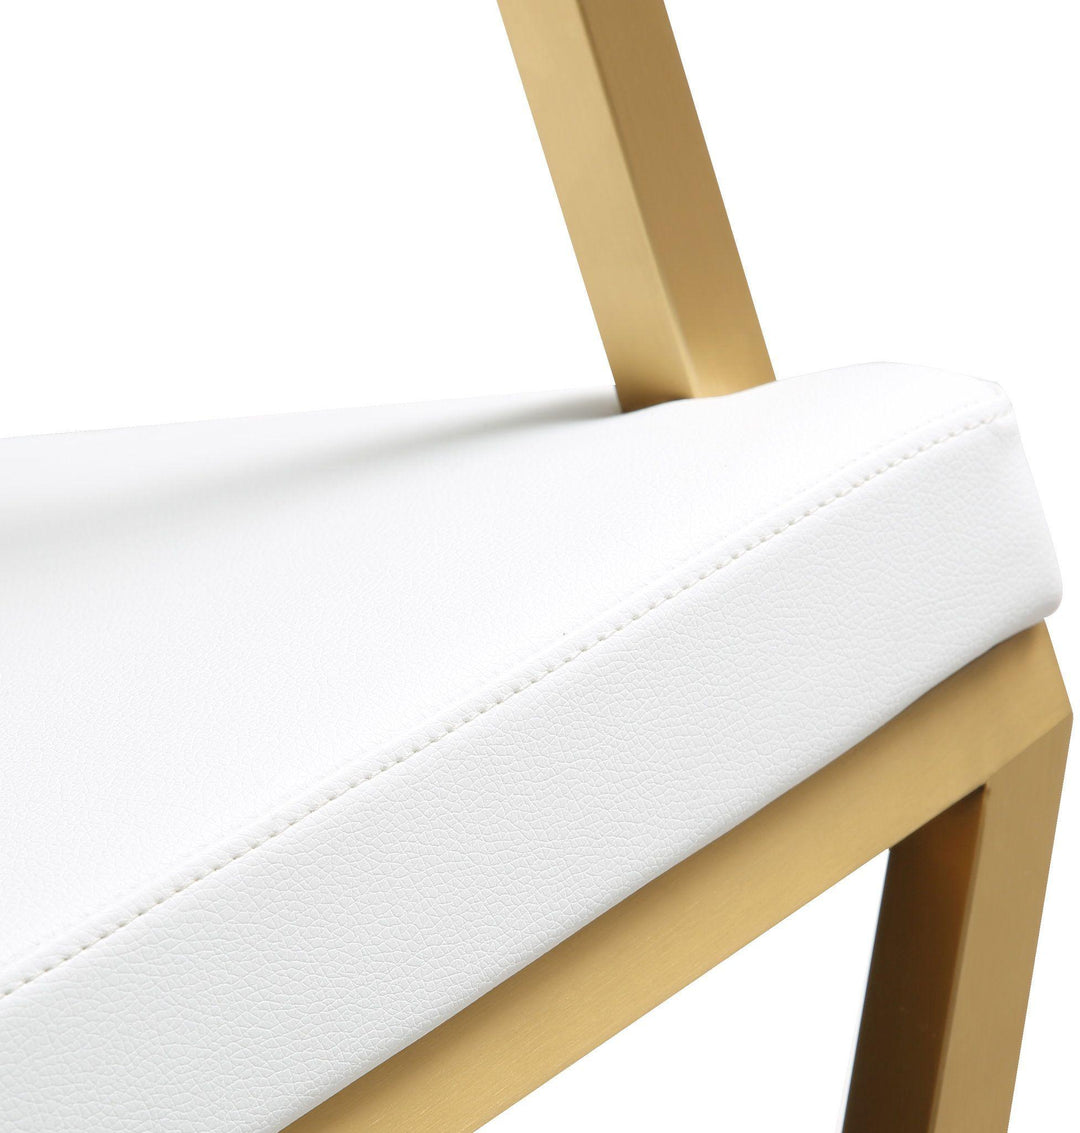 American Home Furniture | TOV Furniture - Director White Gold Steel Barstool